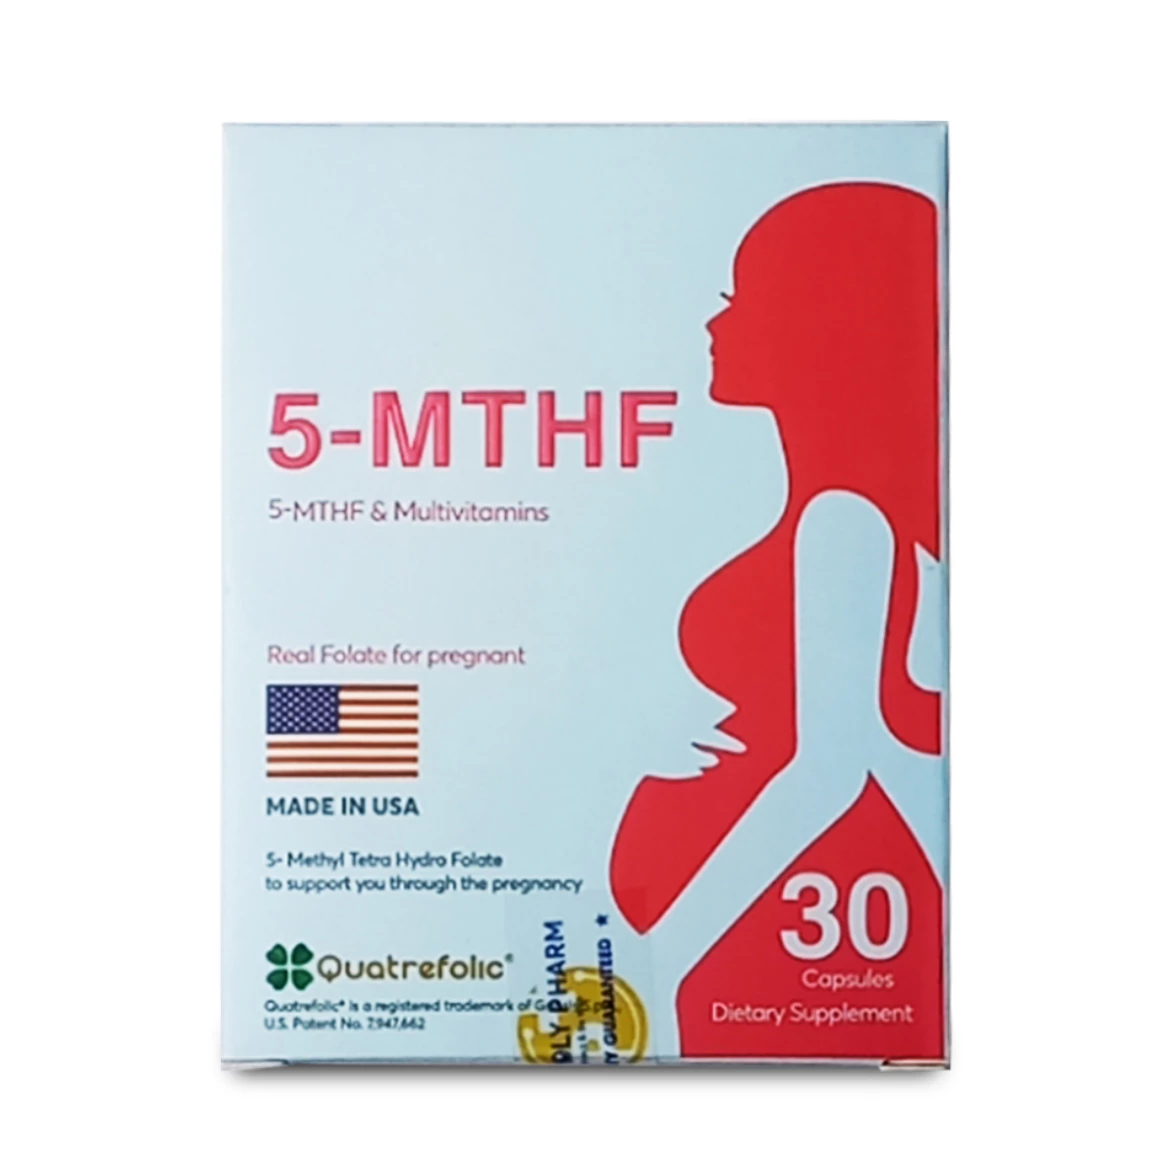 5MTHF Multivitamin - Bổ sung acid folic, ngừa dị tật thai nhi